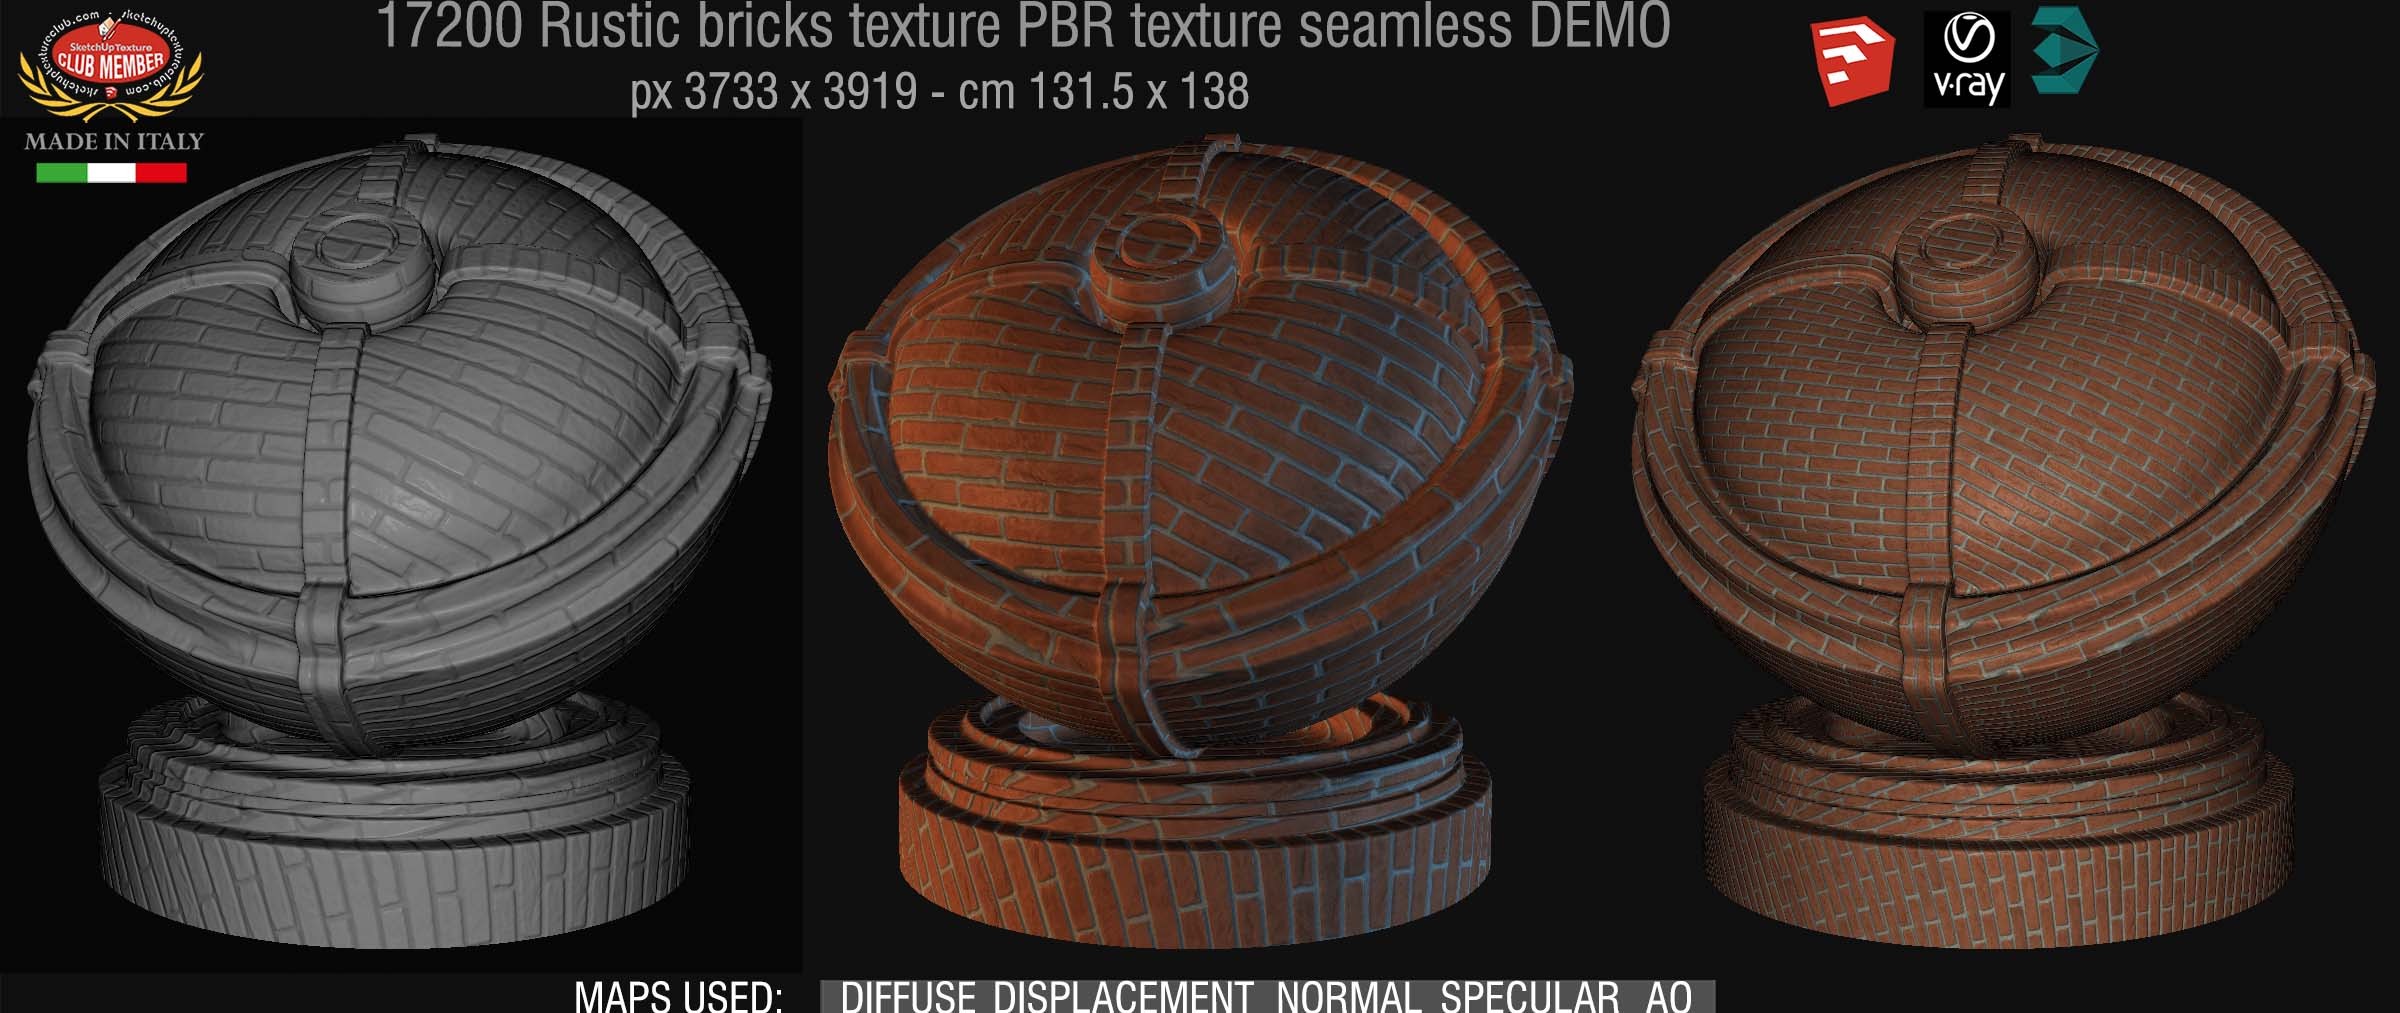 17200 Rustic bricks PBR texture seamless DEMO